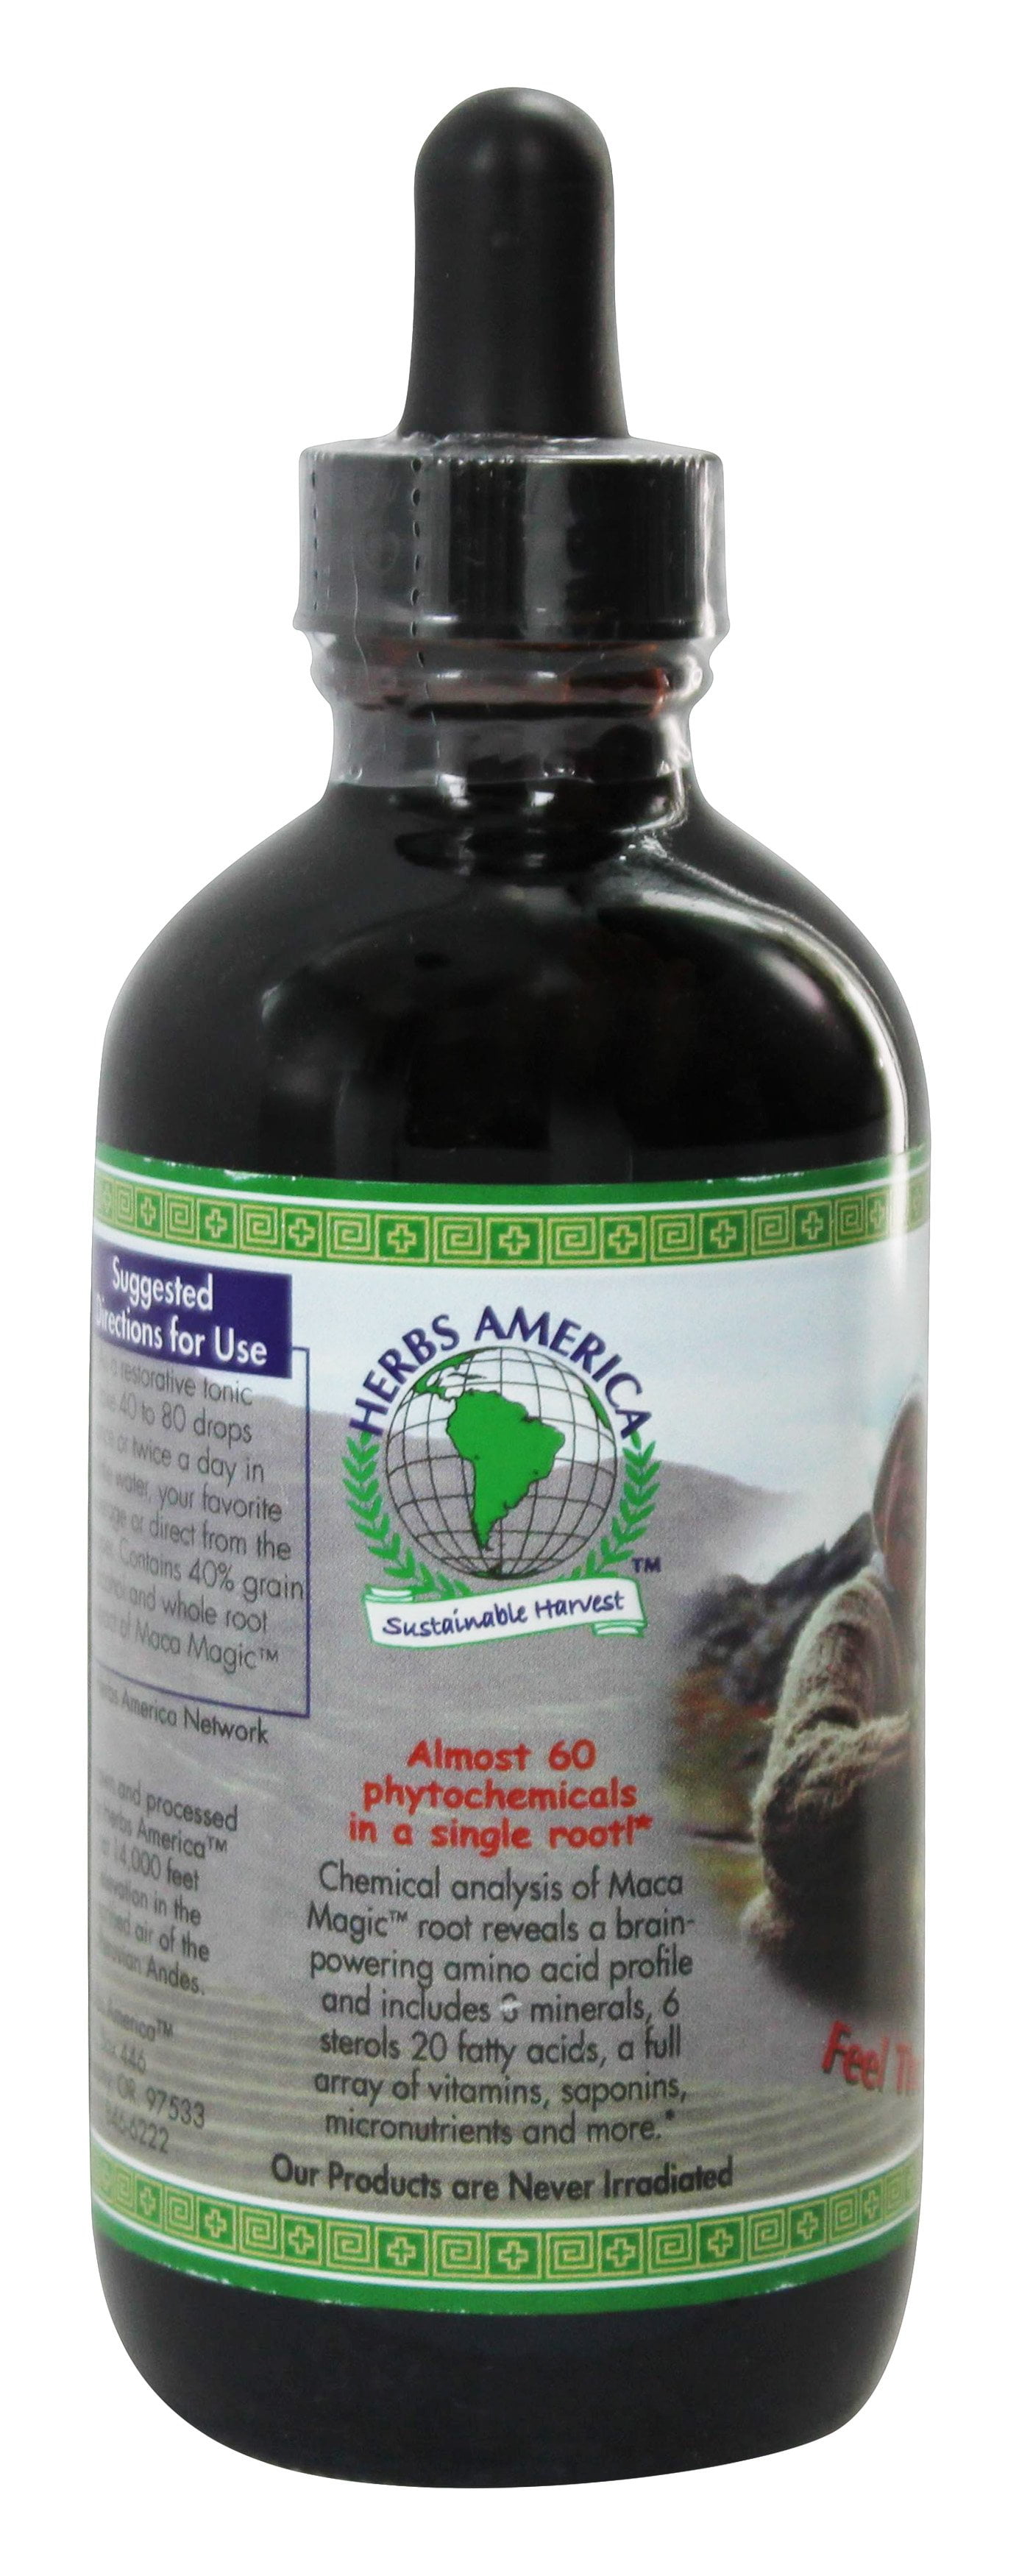 Maca Magic Brand - Herbs America, Inc.